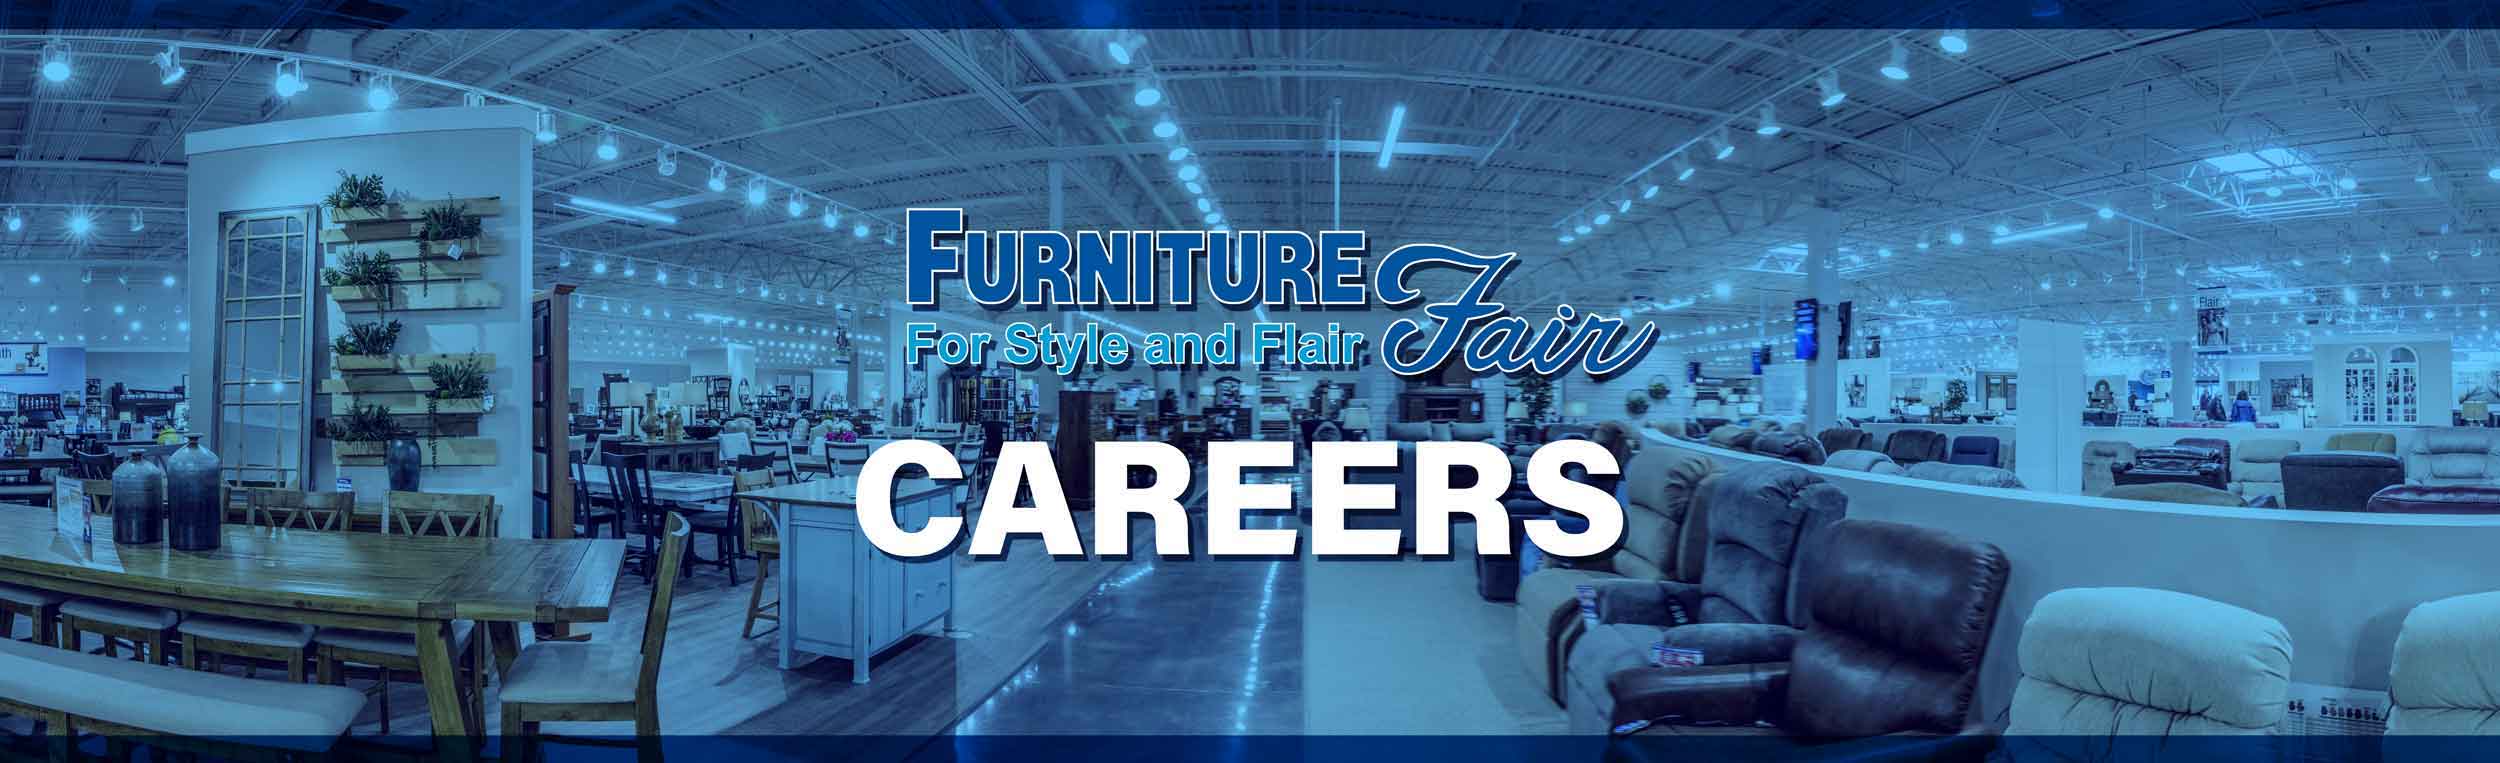 Start Your New Career At Furniture Fair